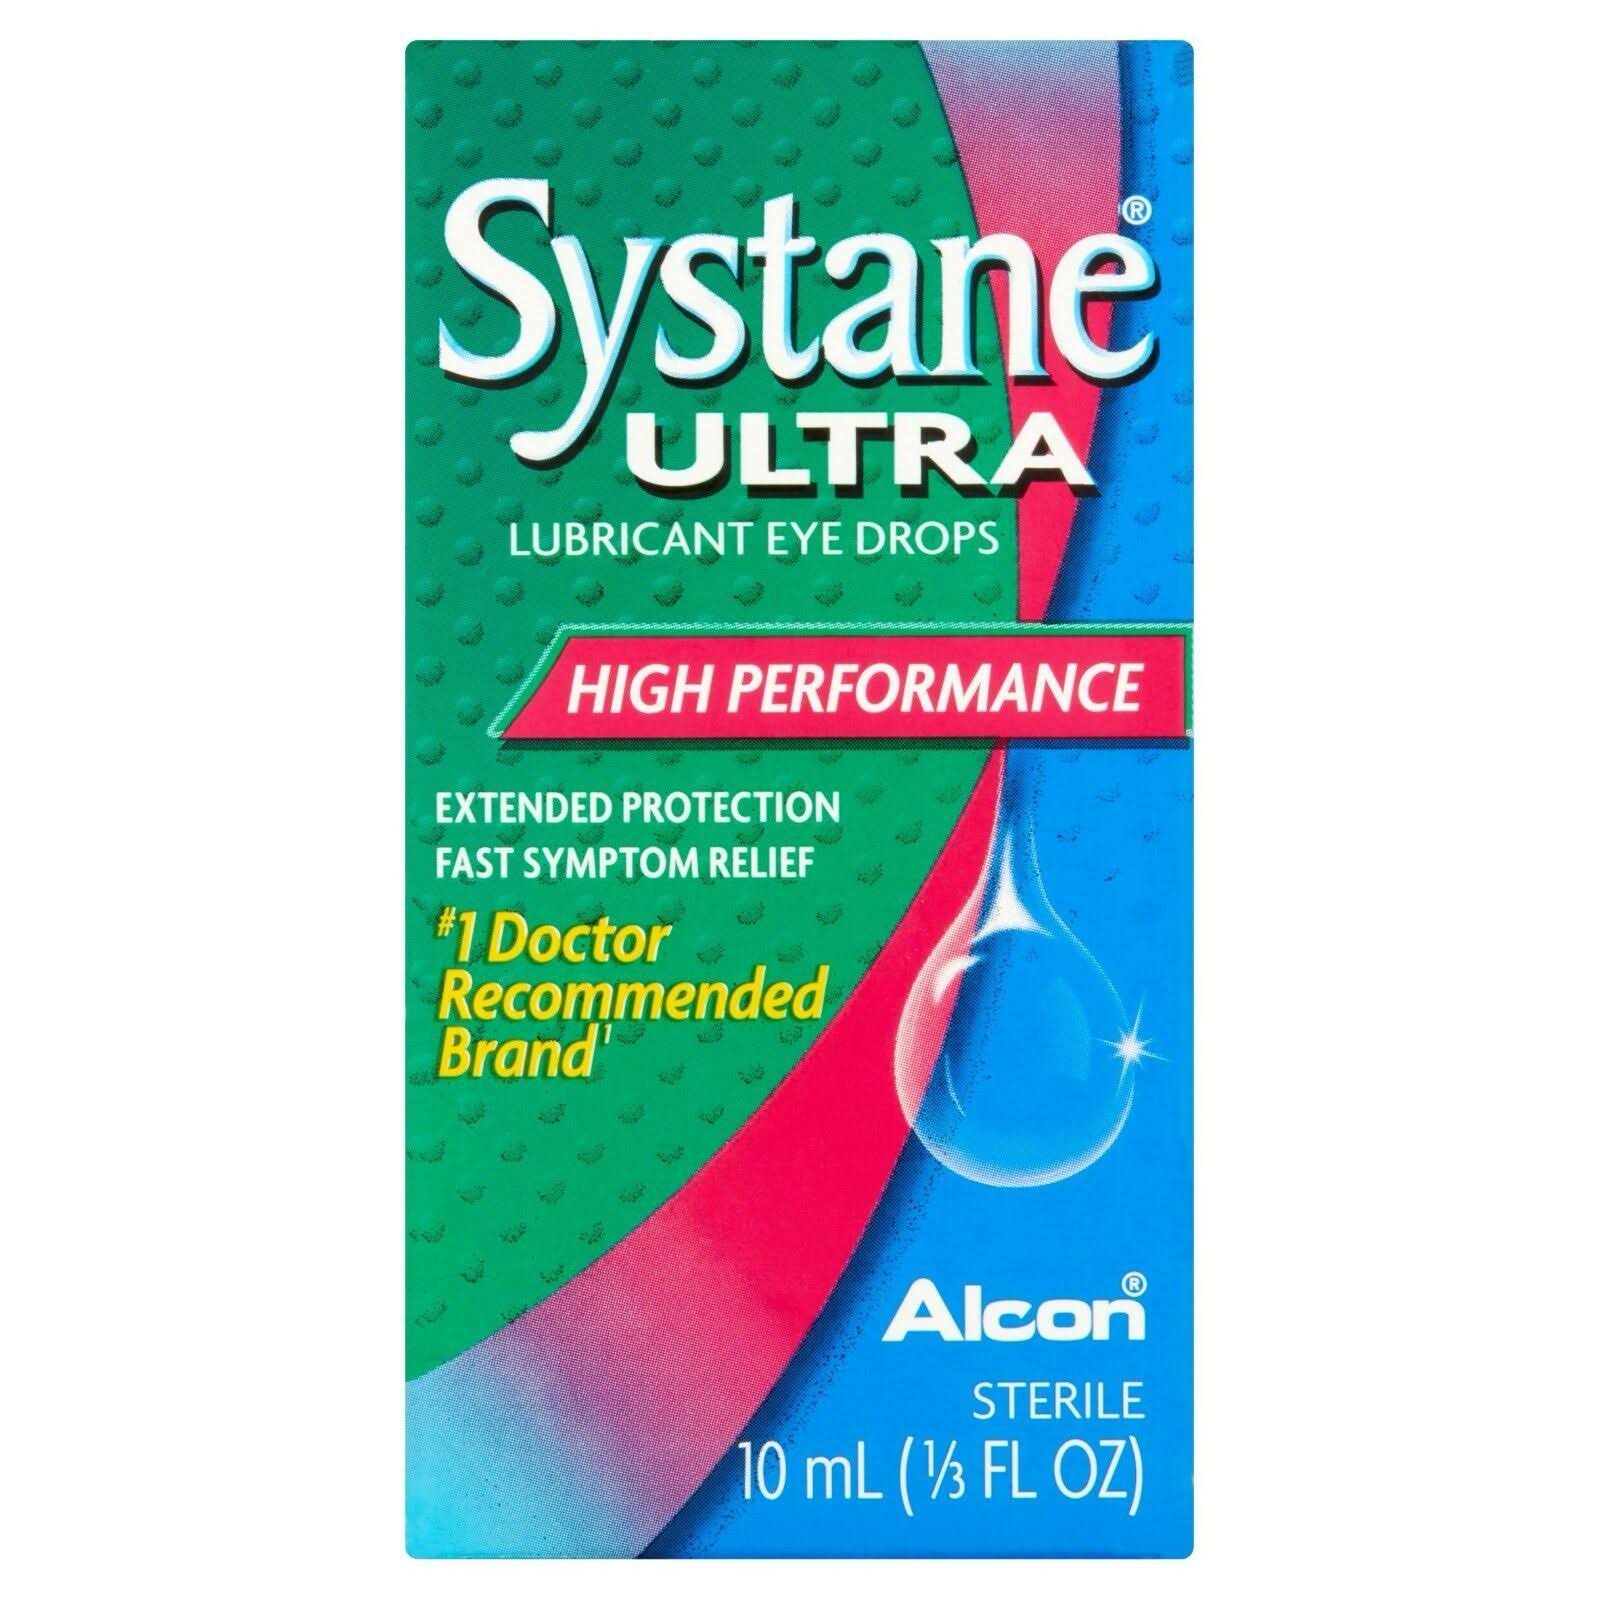 Alcon Systane Ultra High Performance Lubricant Eye Drops - 10ml